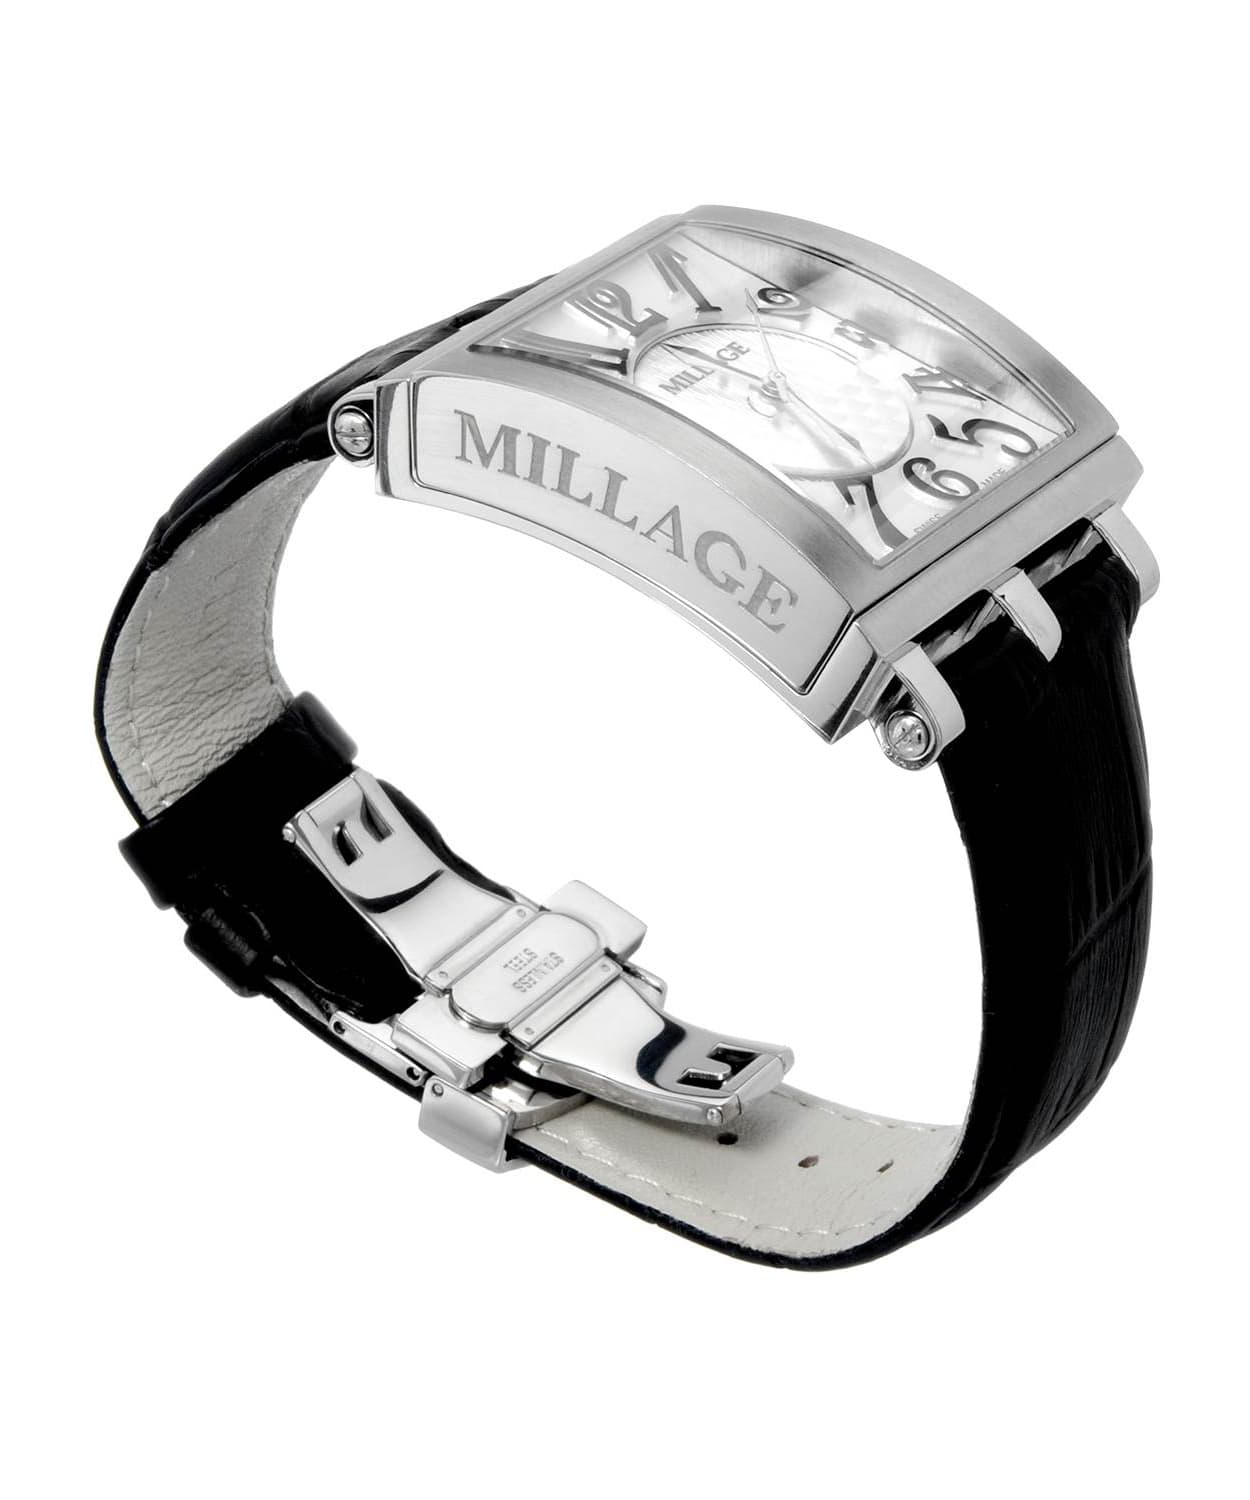 Millage Dijon Collection Model M4226 Watch - Swiss Quartz Movement View 2